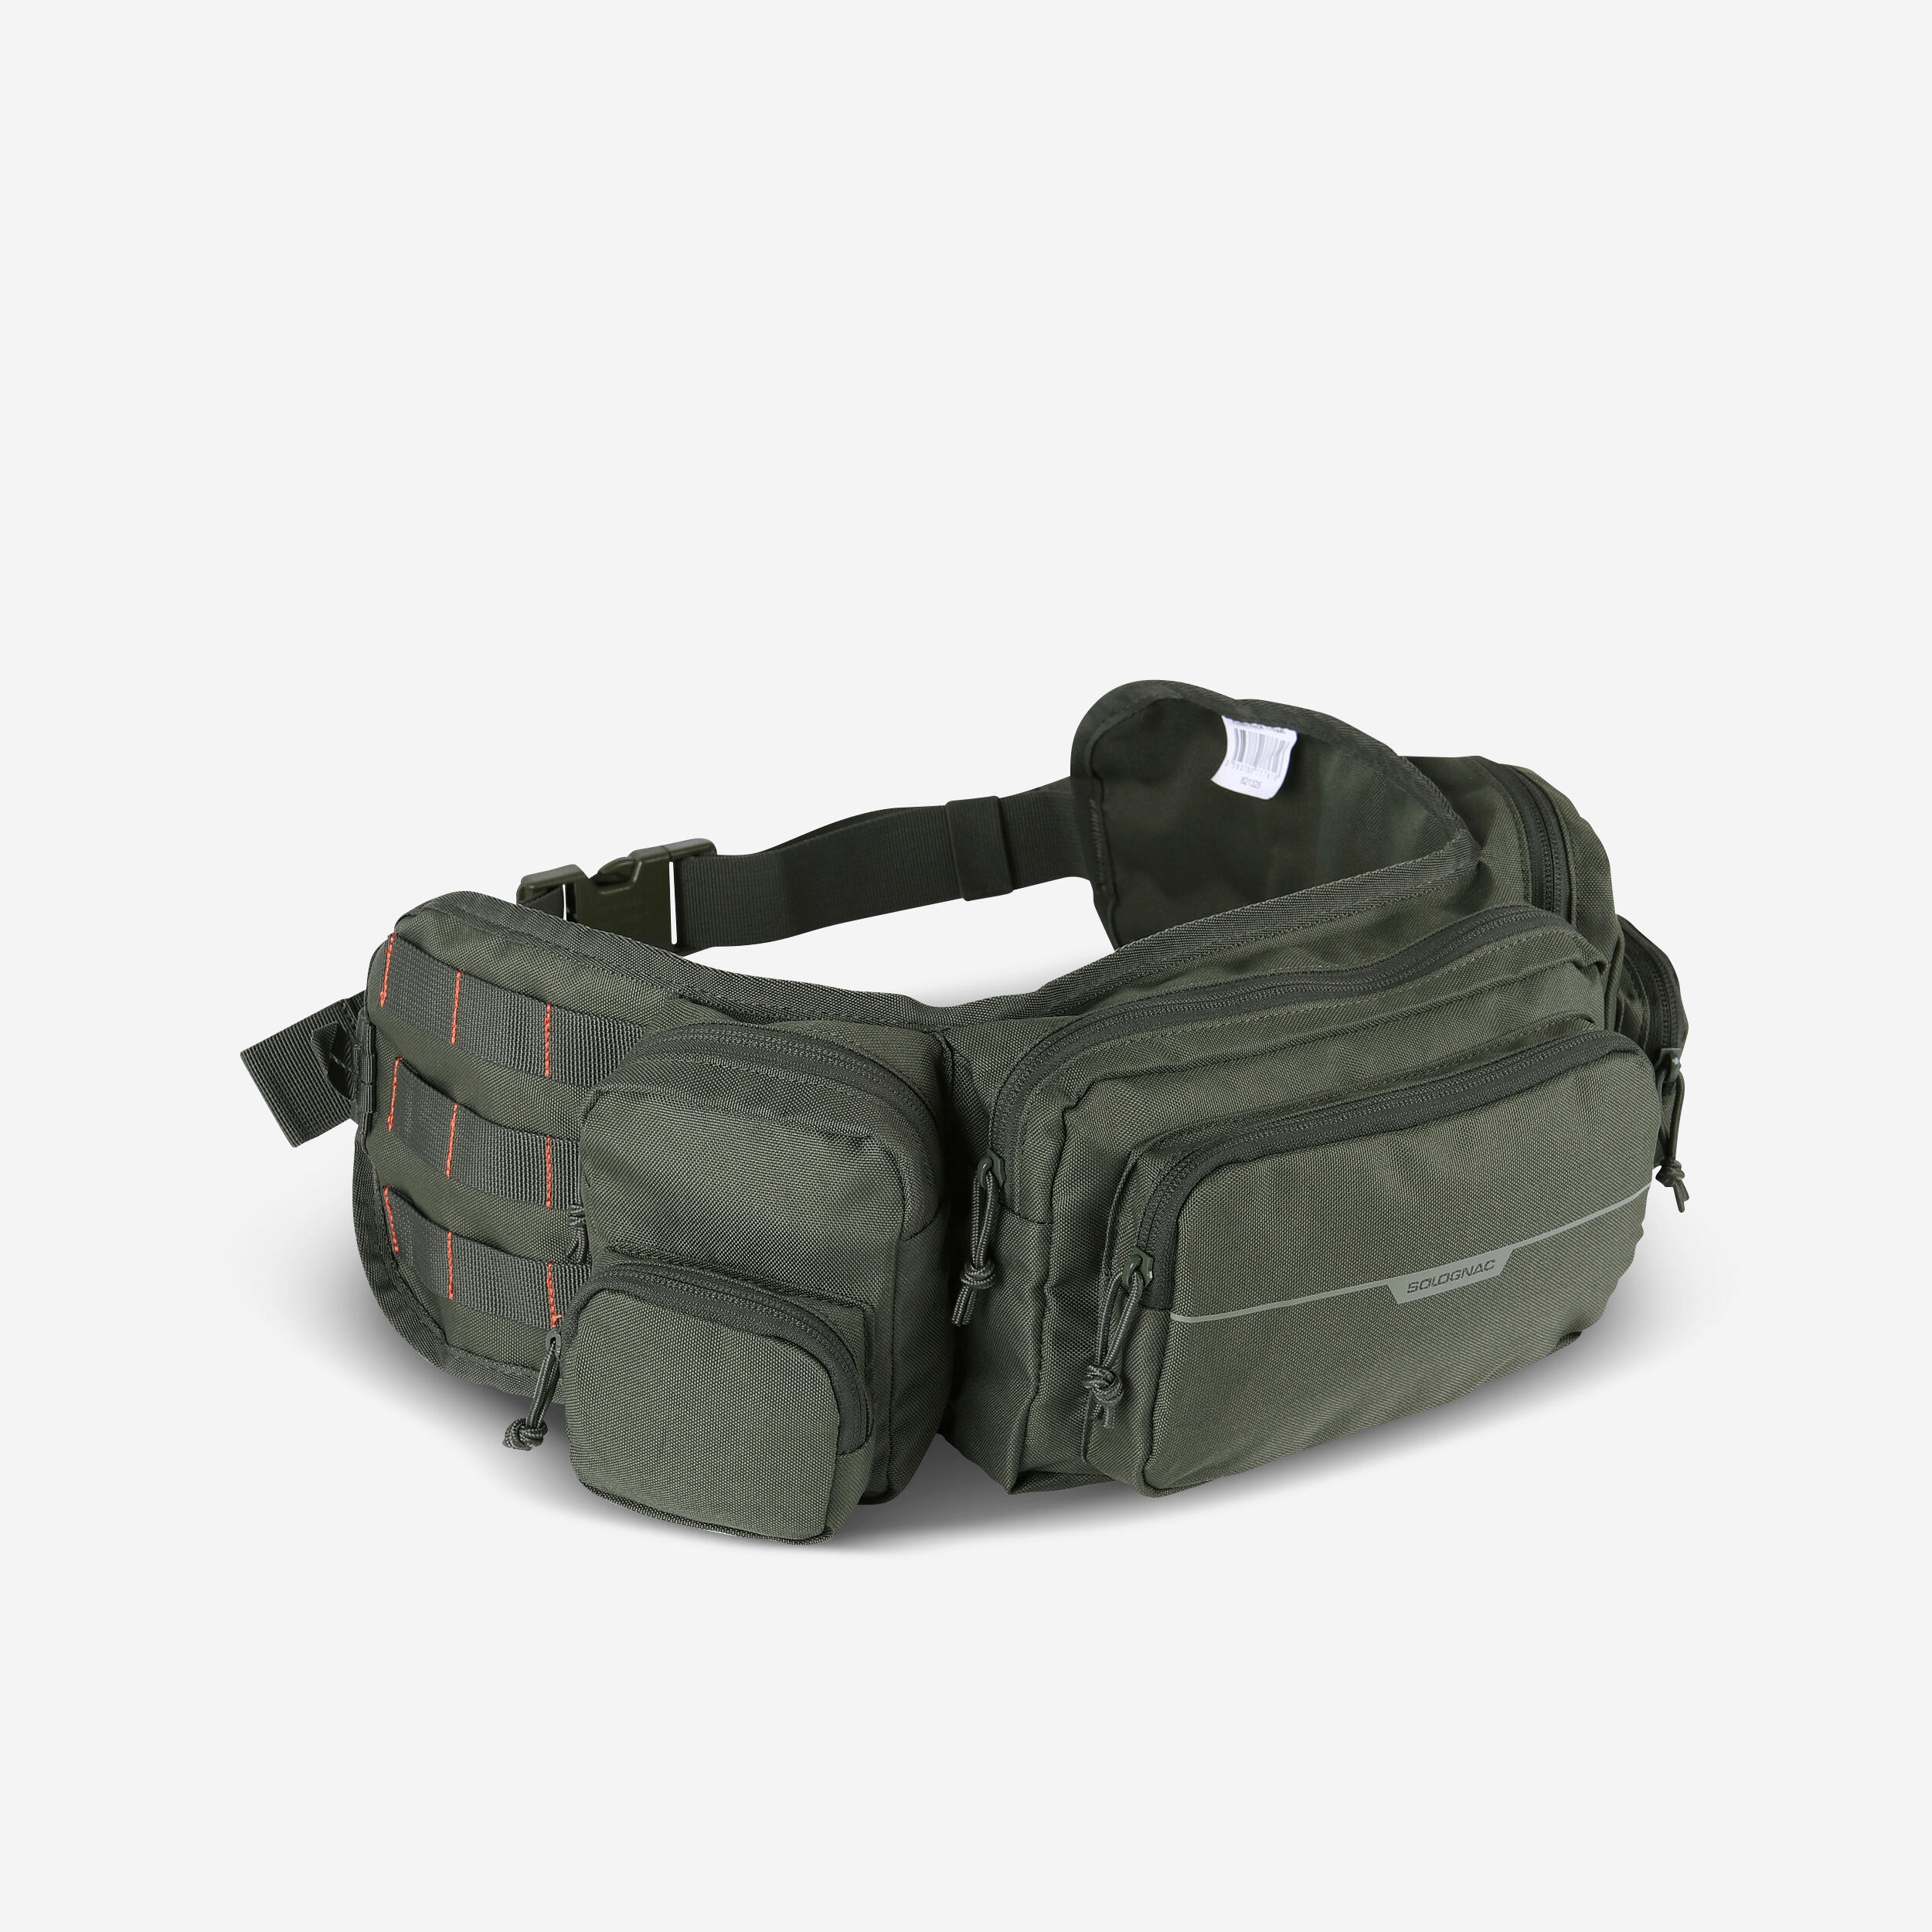 Decathlon / Belt Bag / Running Belt Bag / Adjustable Size of Smartphone And  Key / Kalenji | Shopee Malaysia